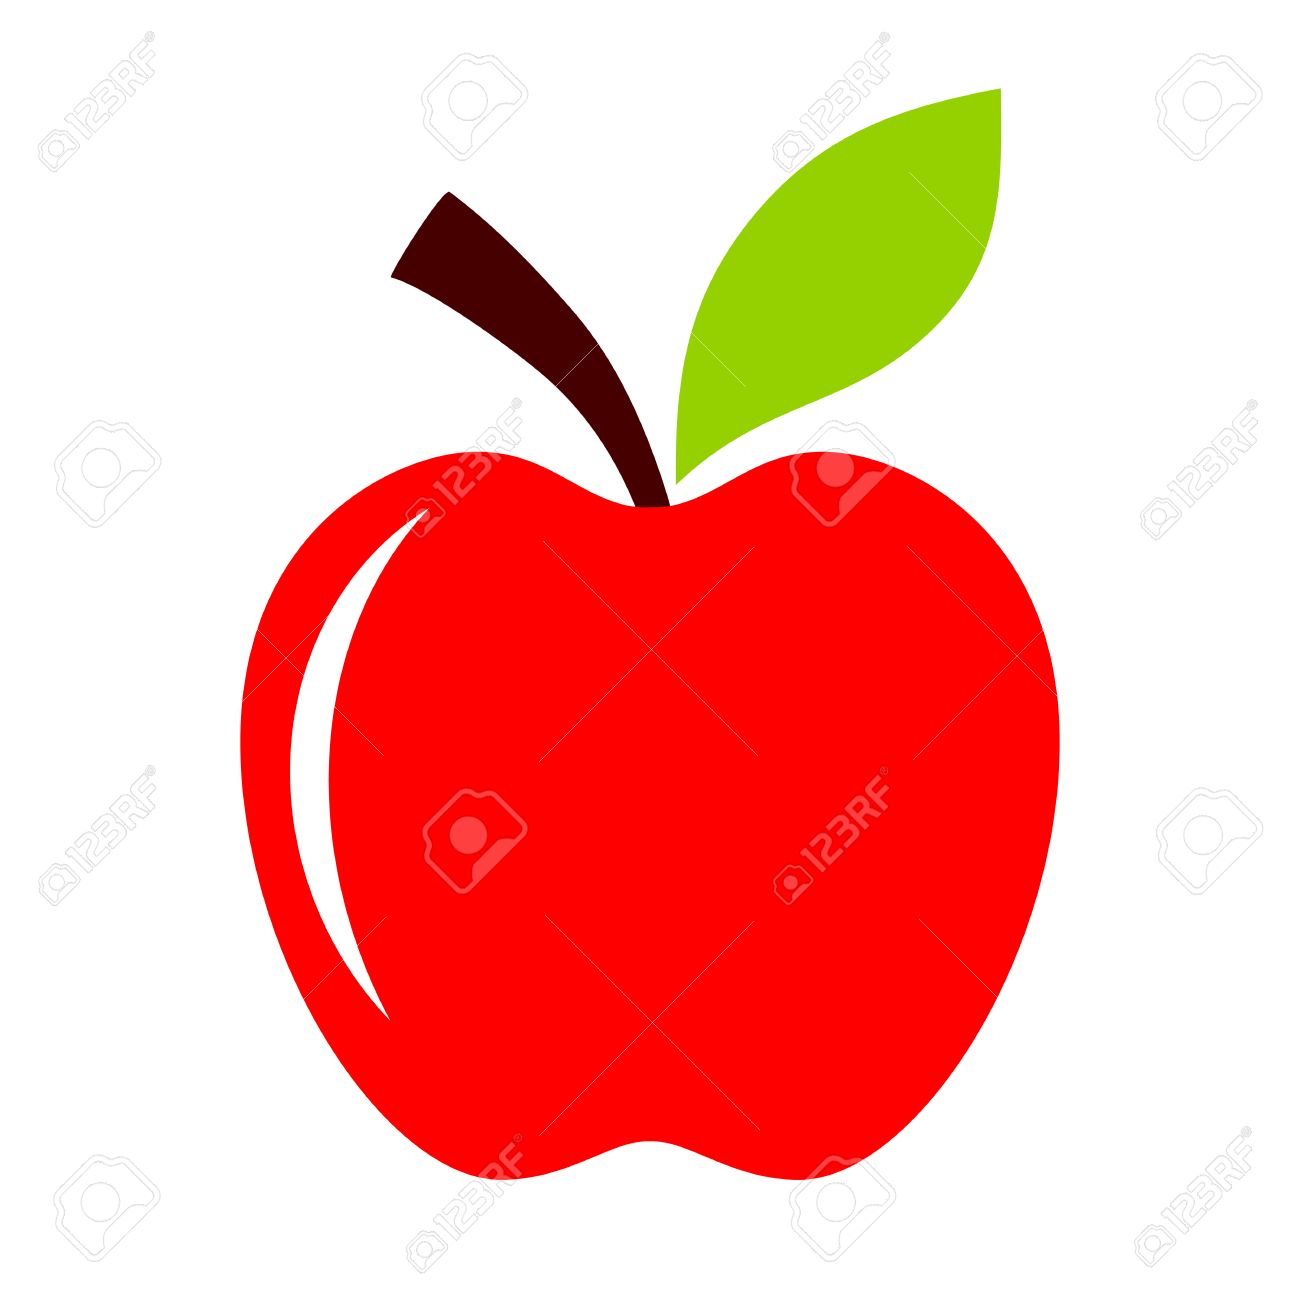 Red apple icon Royalty Free Vector Image - VectorStock